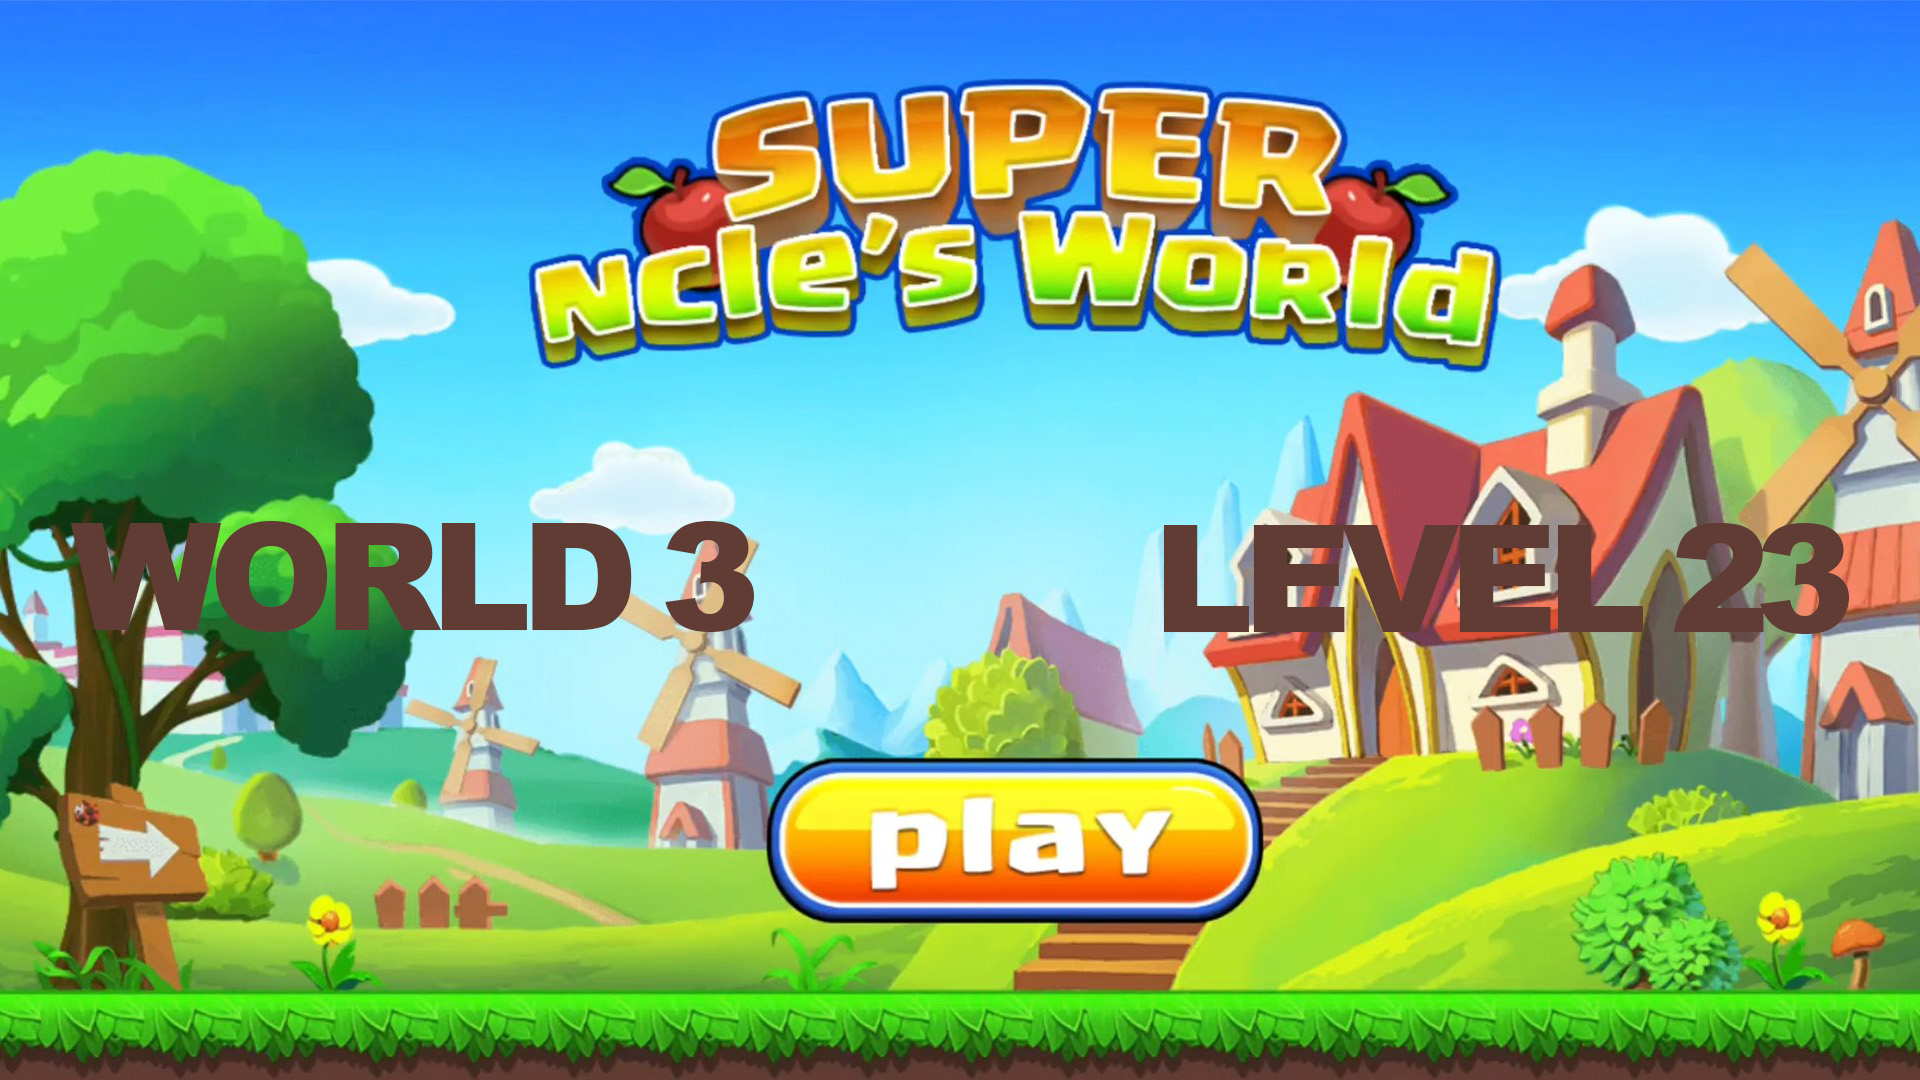 Super ncle's  World 3. Level 23.